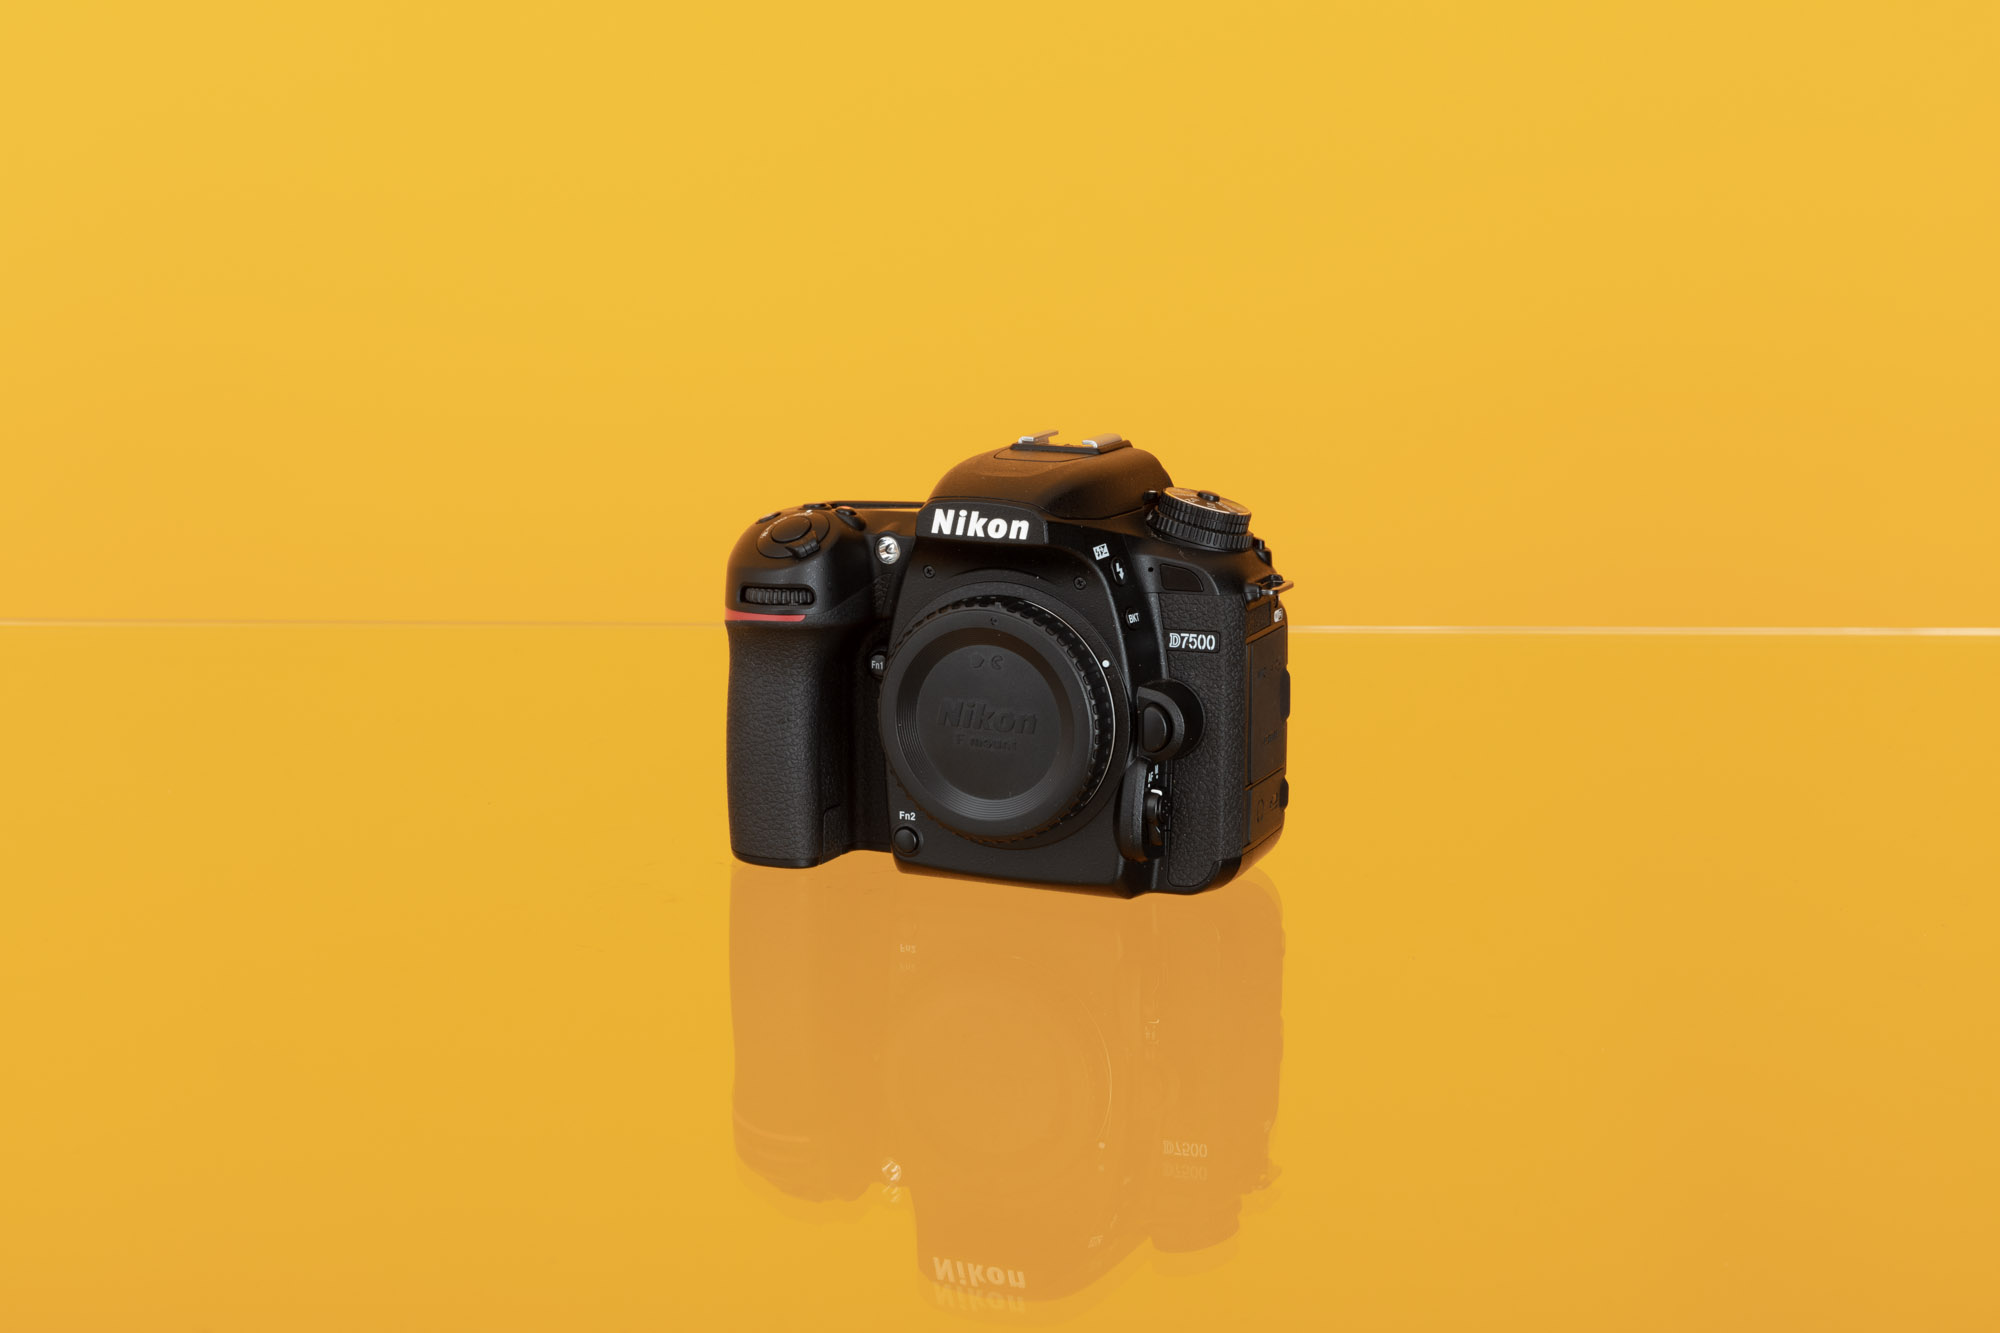 Nikon D7500 Model Overview Specs